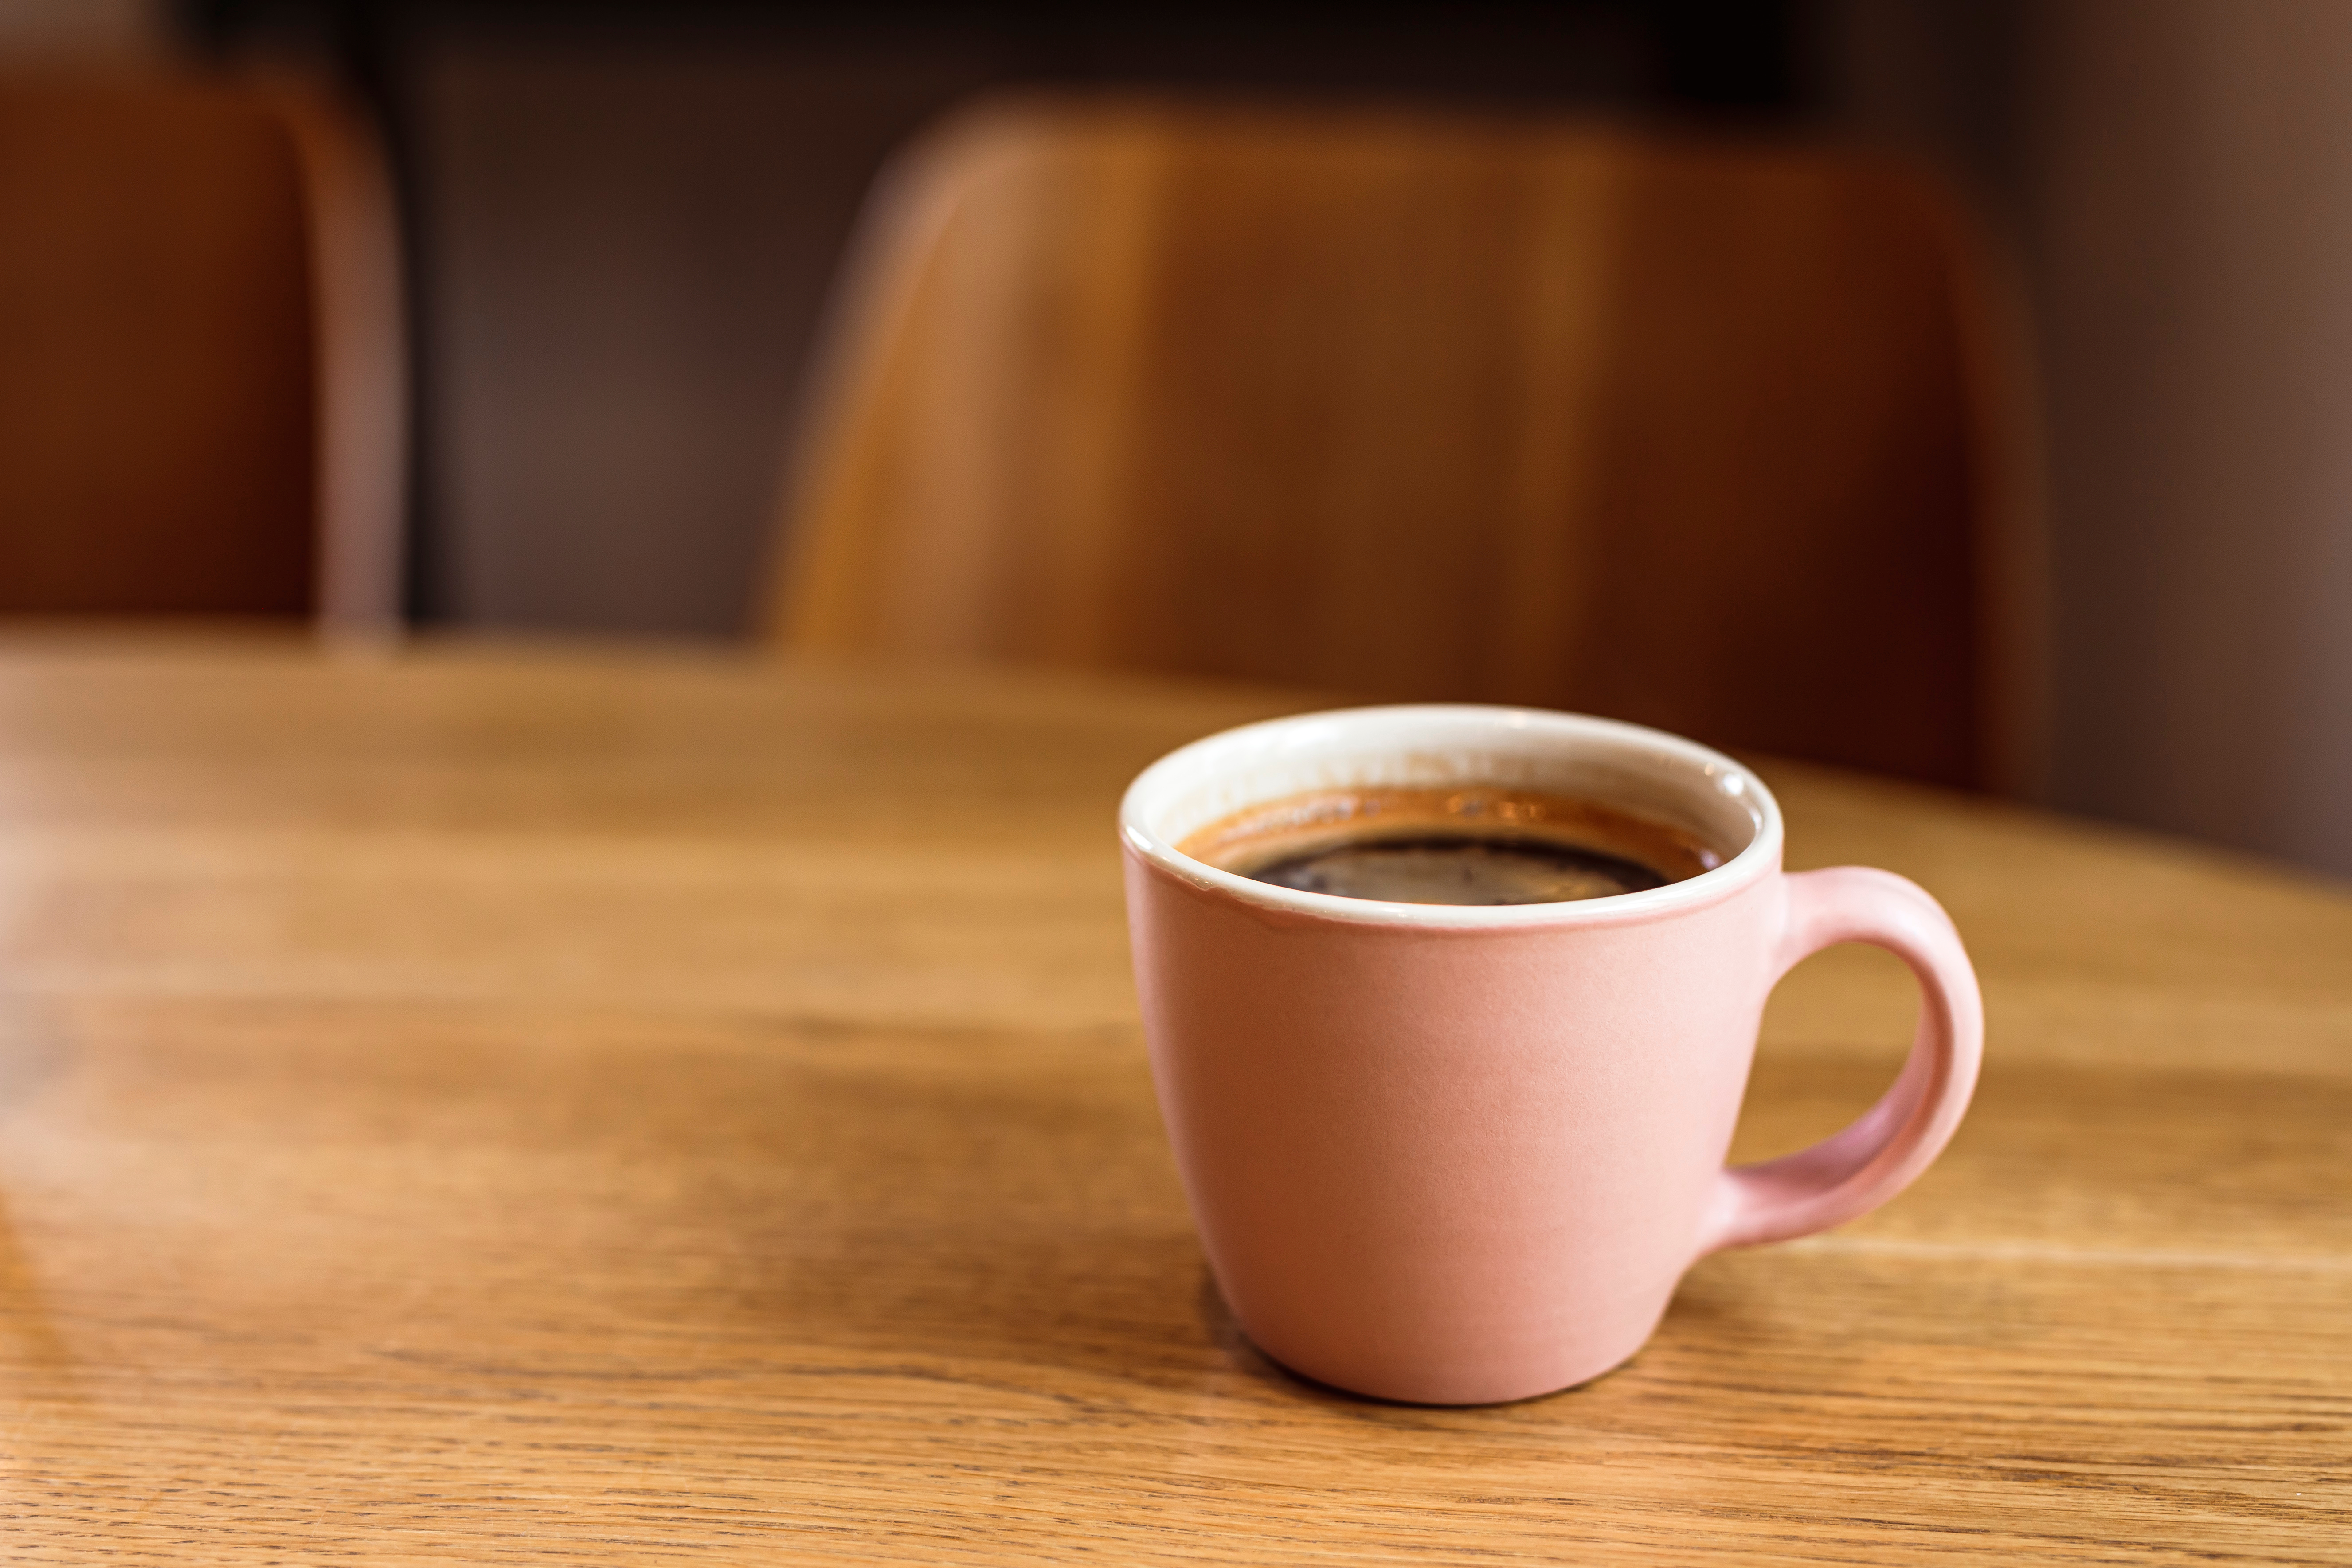 A pink ceramic cup | Source: Shutterstock